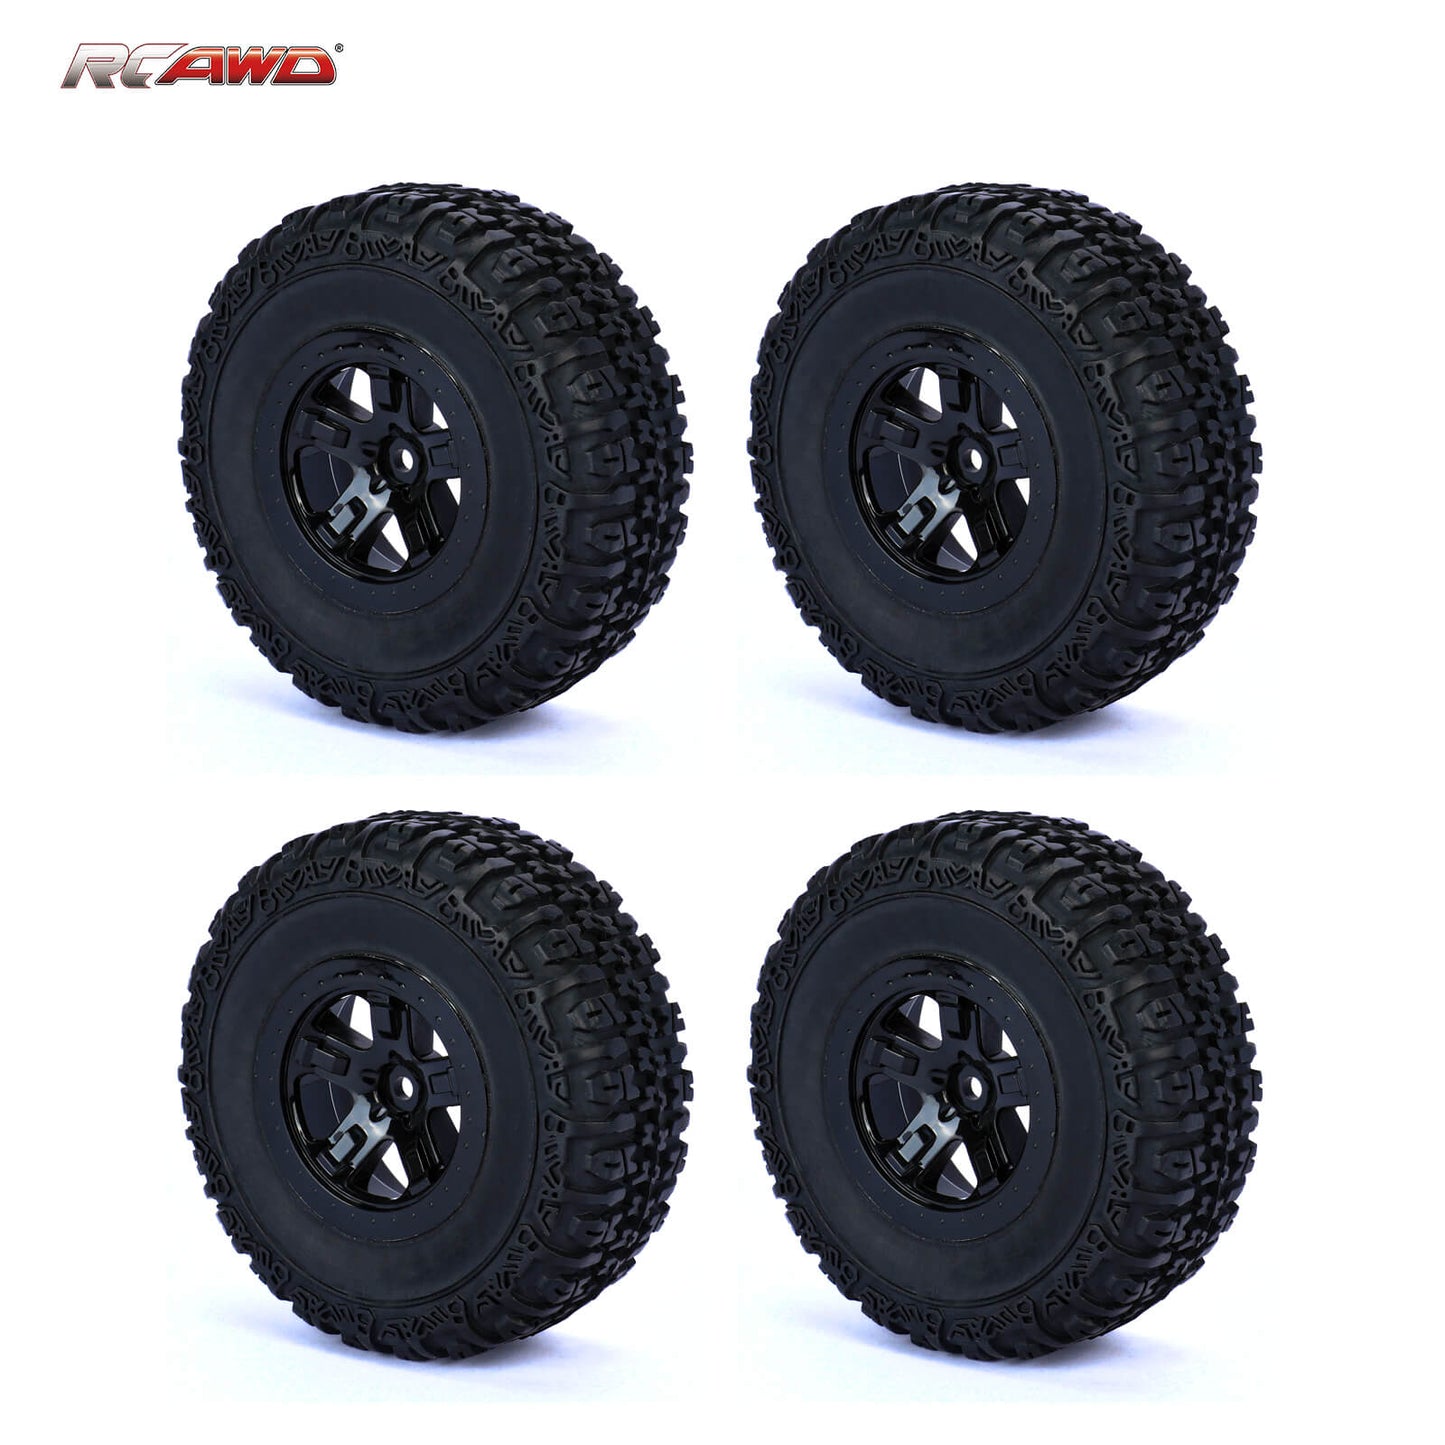 RCAWD Amazon RC Wheel & Tires 5 spokes LG-018BL 1/10 Pre-glued Monster Truck Wheel Tires LG-017BL LG-018BL